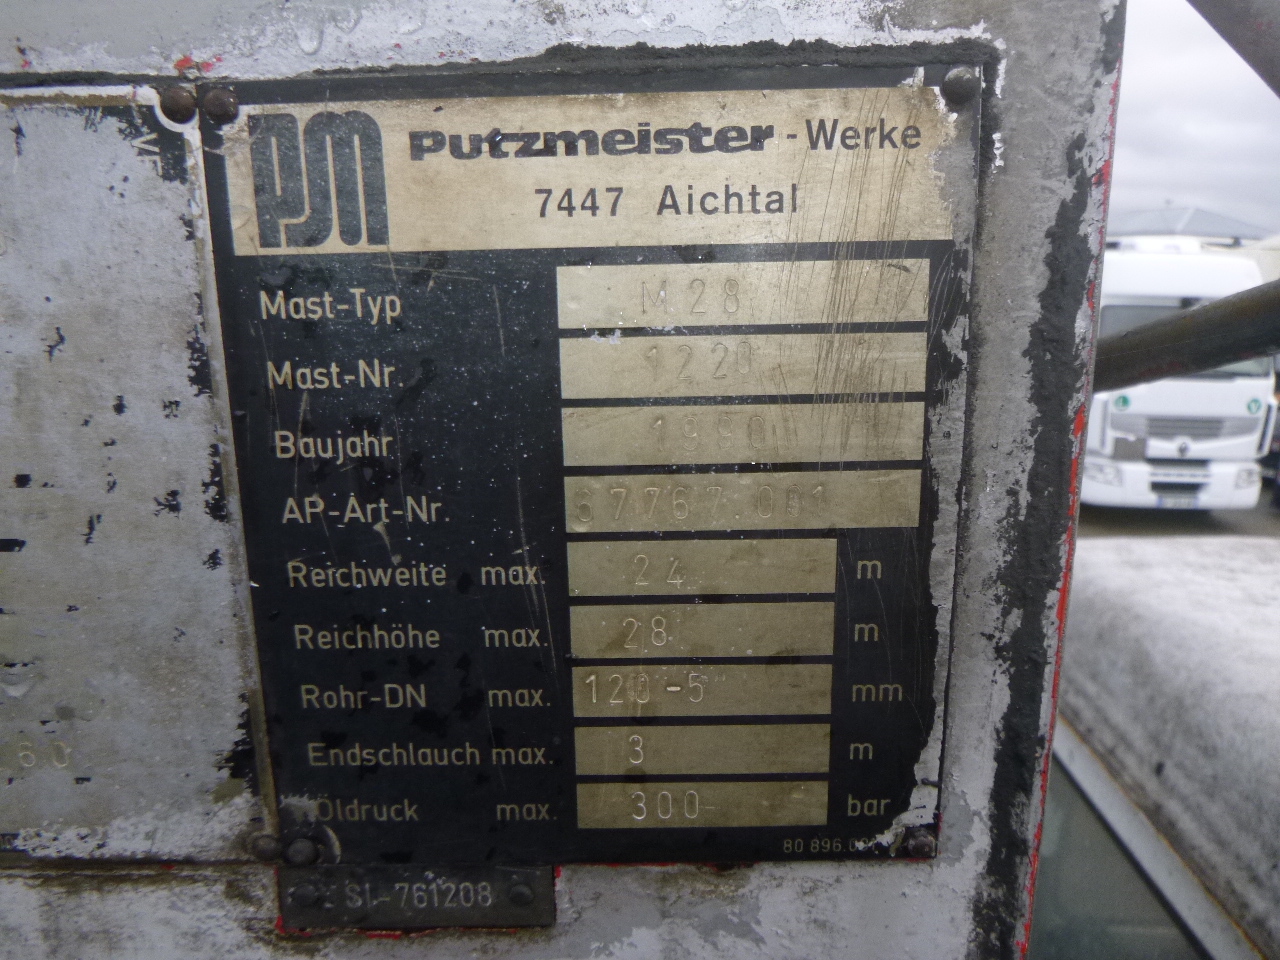 Pompa do betonu Mercedes 1922 4x2 Putzmeister concrete pump: zdjęcie 6